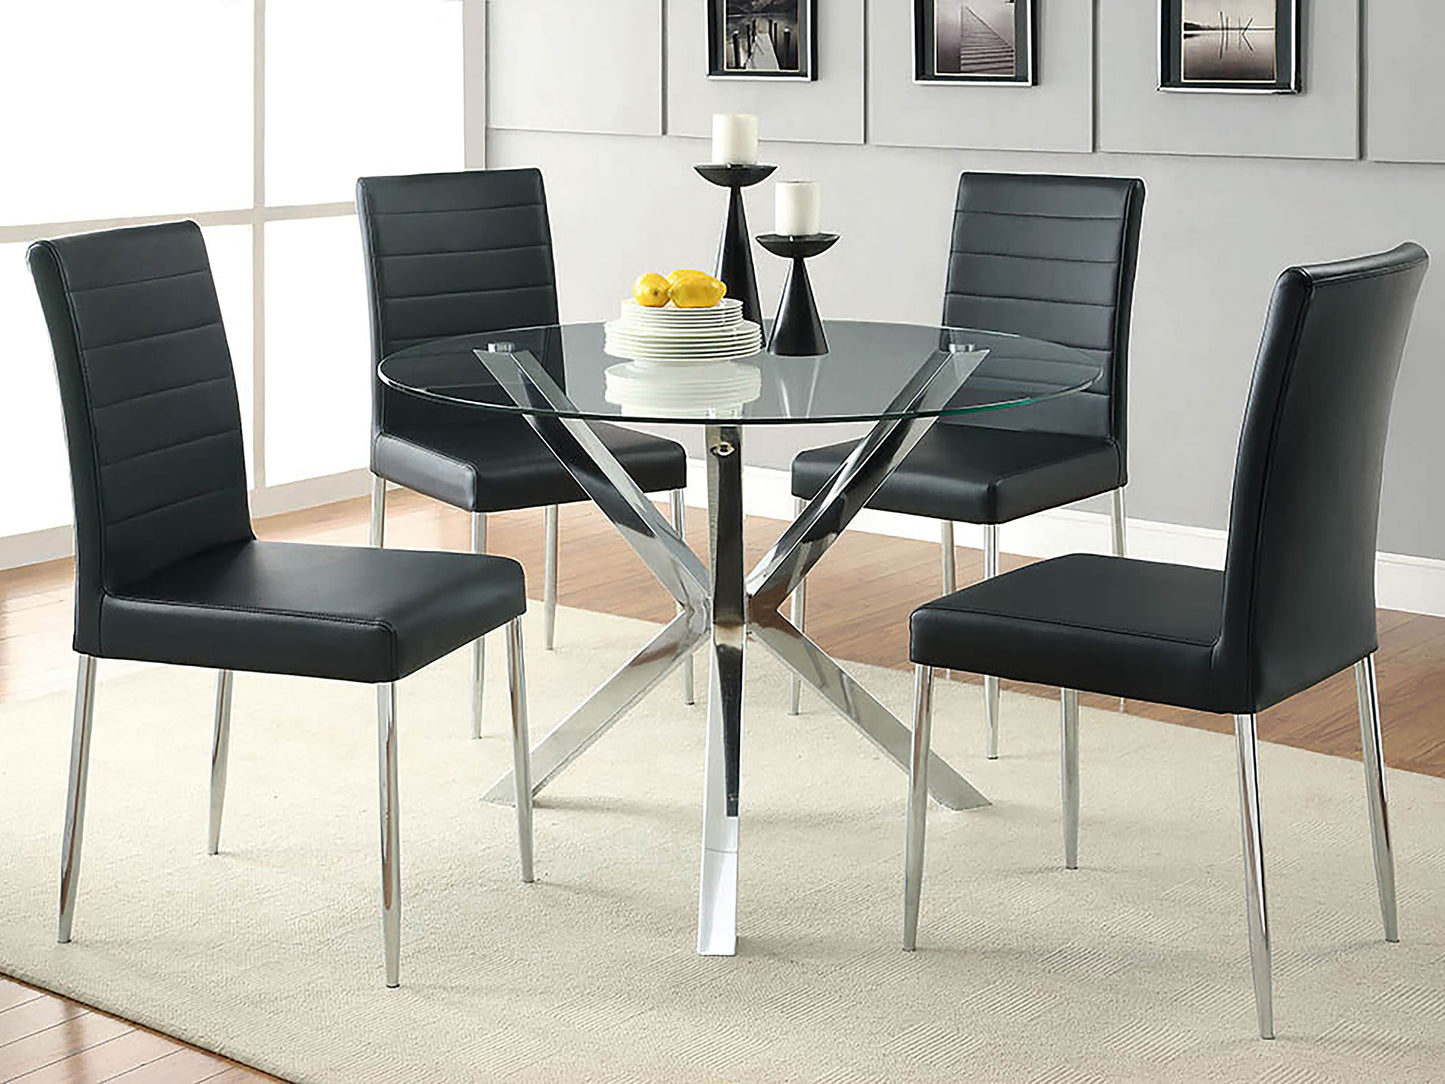 Maston Upholstered Dining Chairs Black (Set of 4)